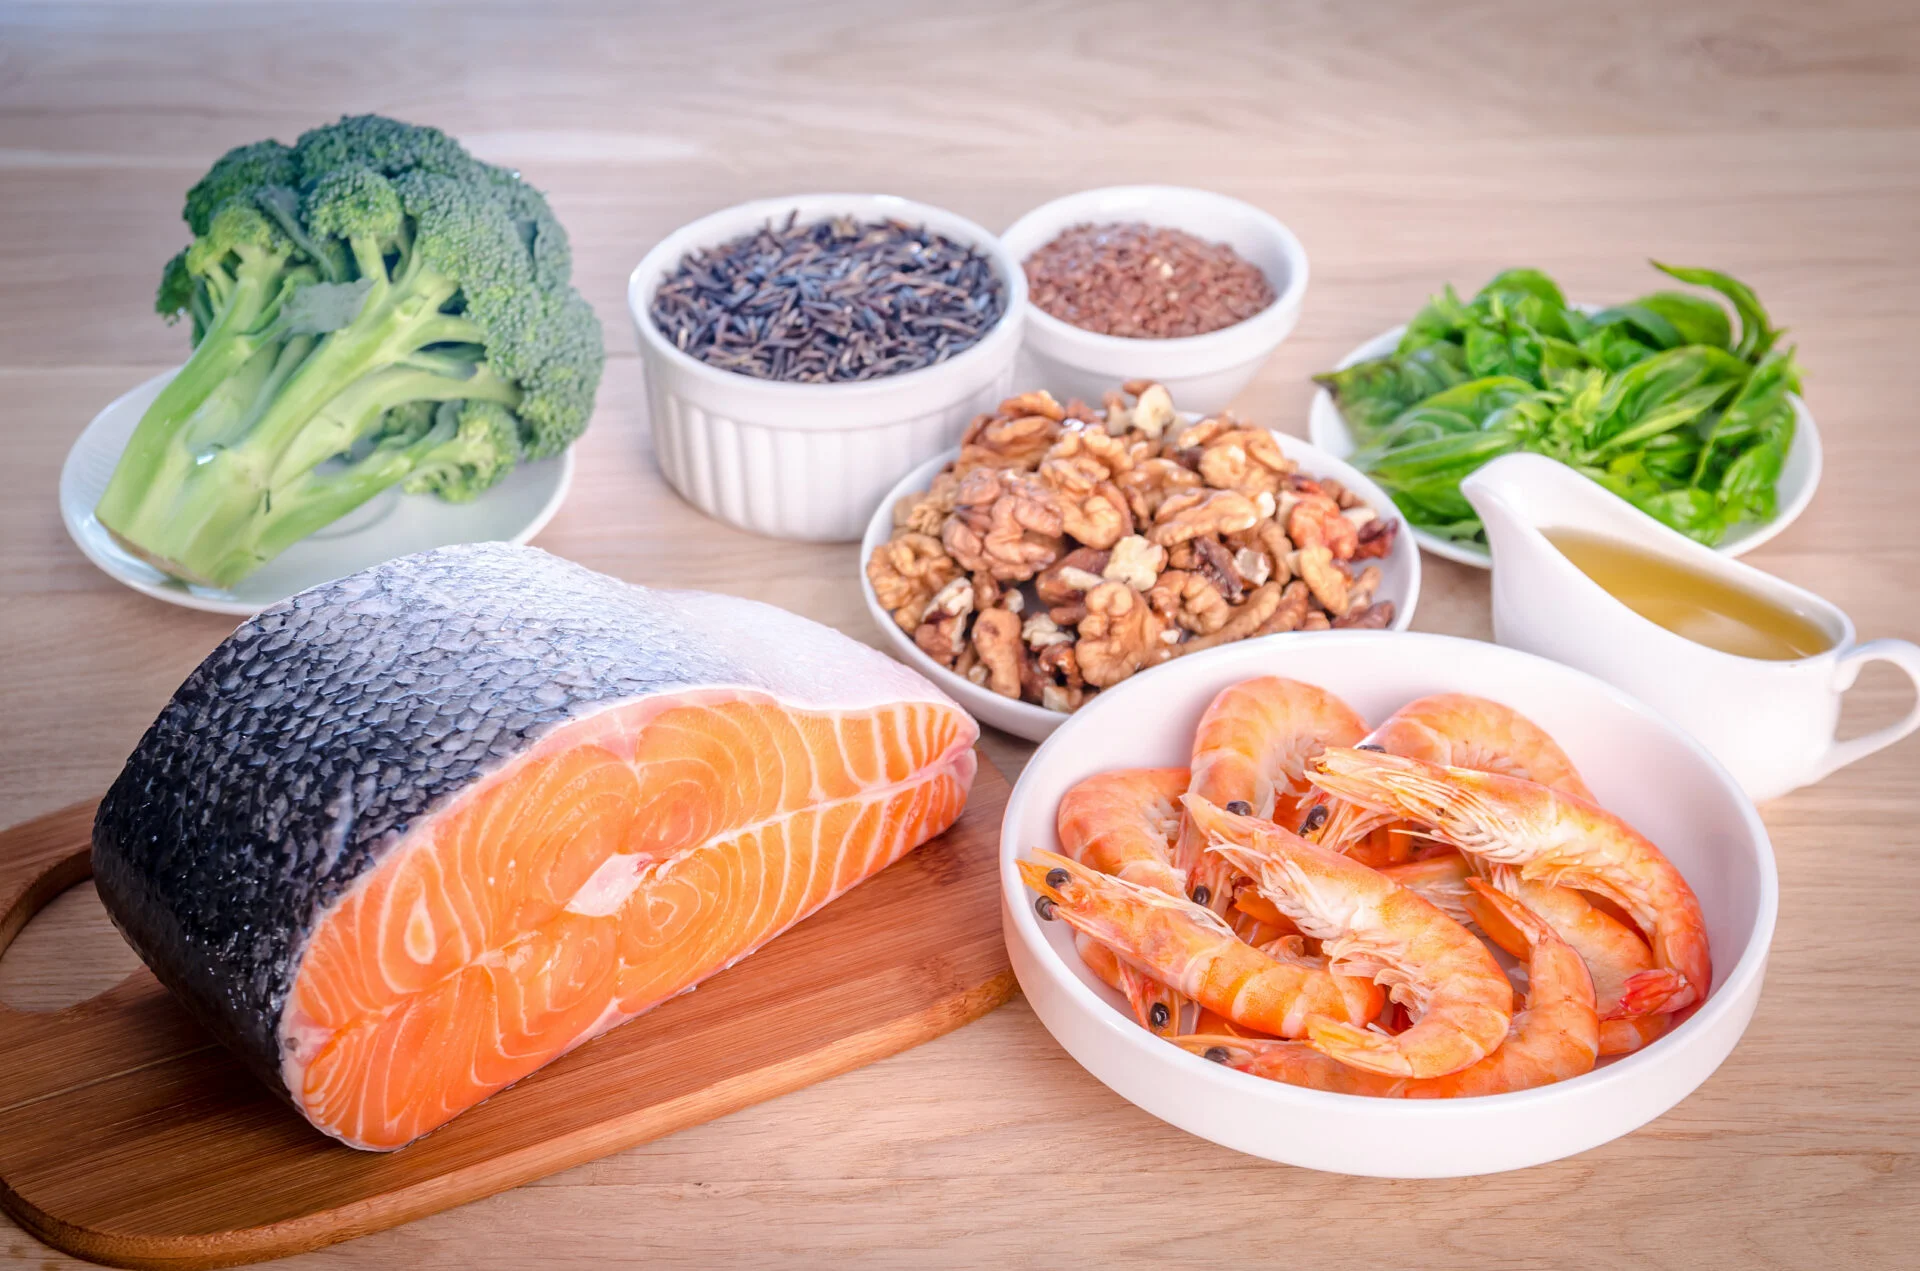 Omega-3s are in salmon, shrimp, broccoli, & greens